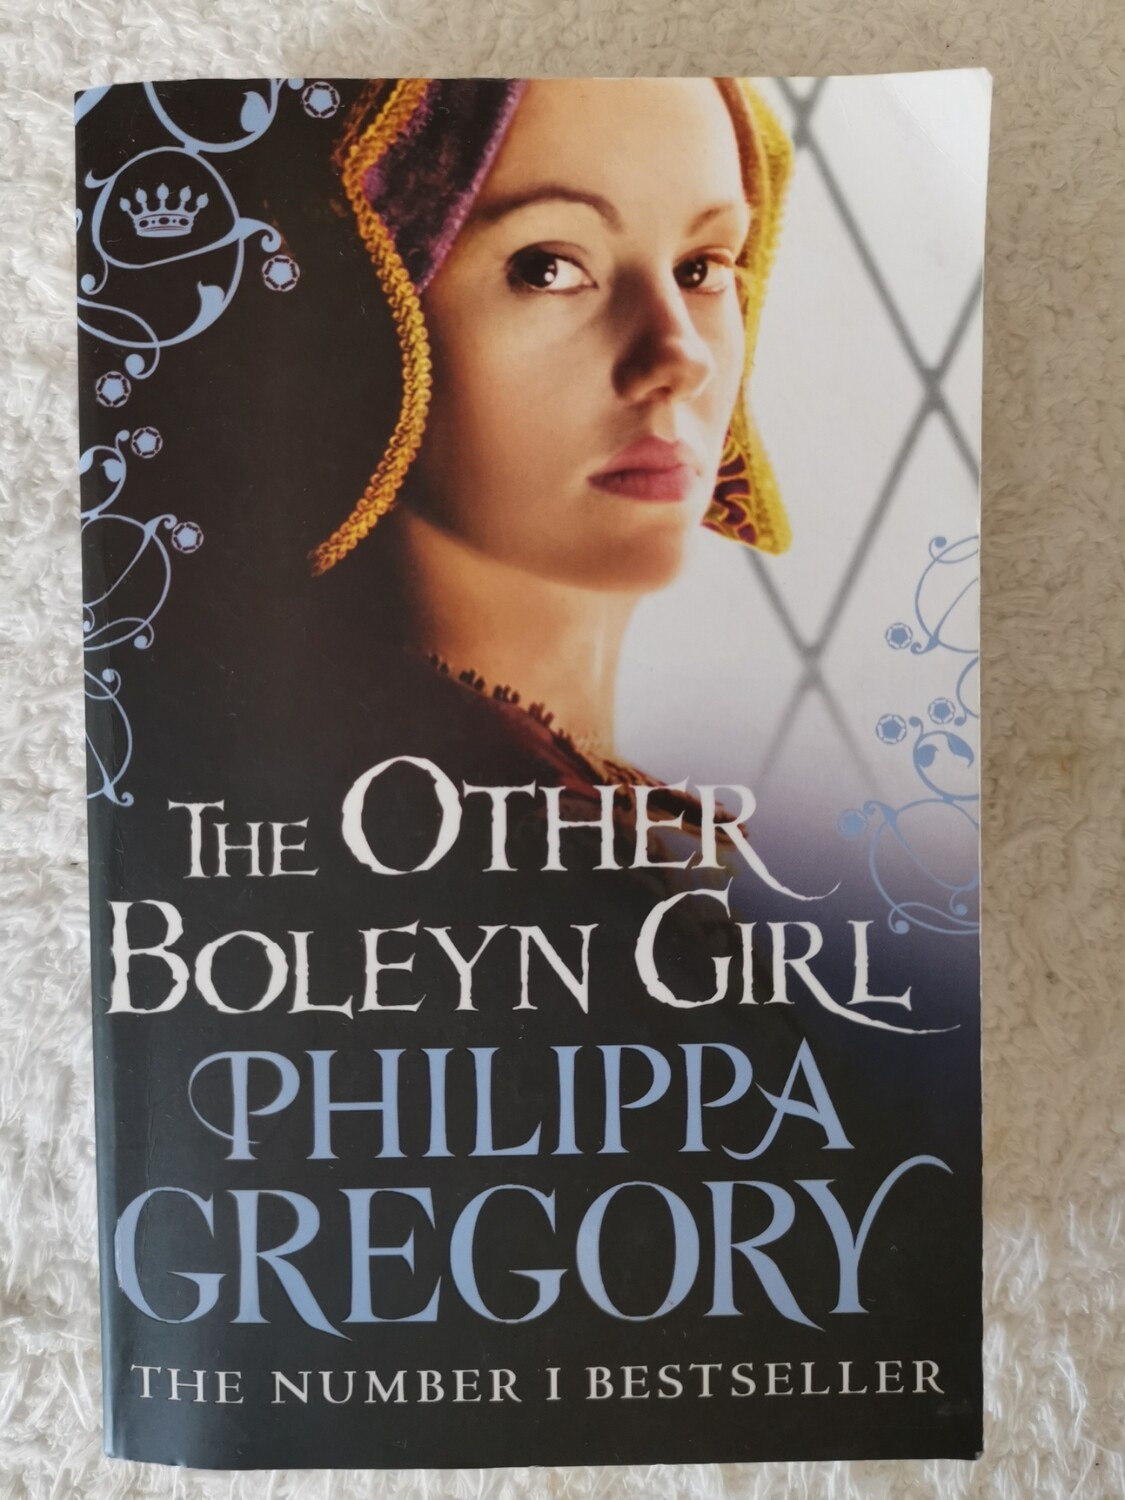 The other Boleyn Girl, Philippa Gregory